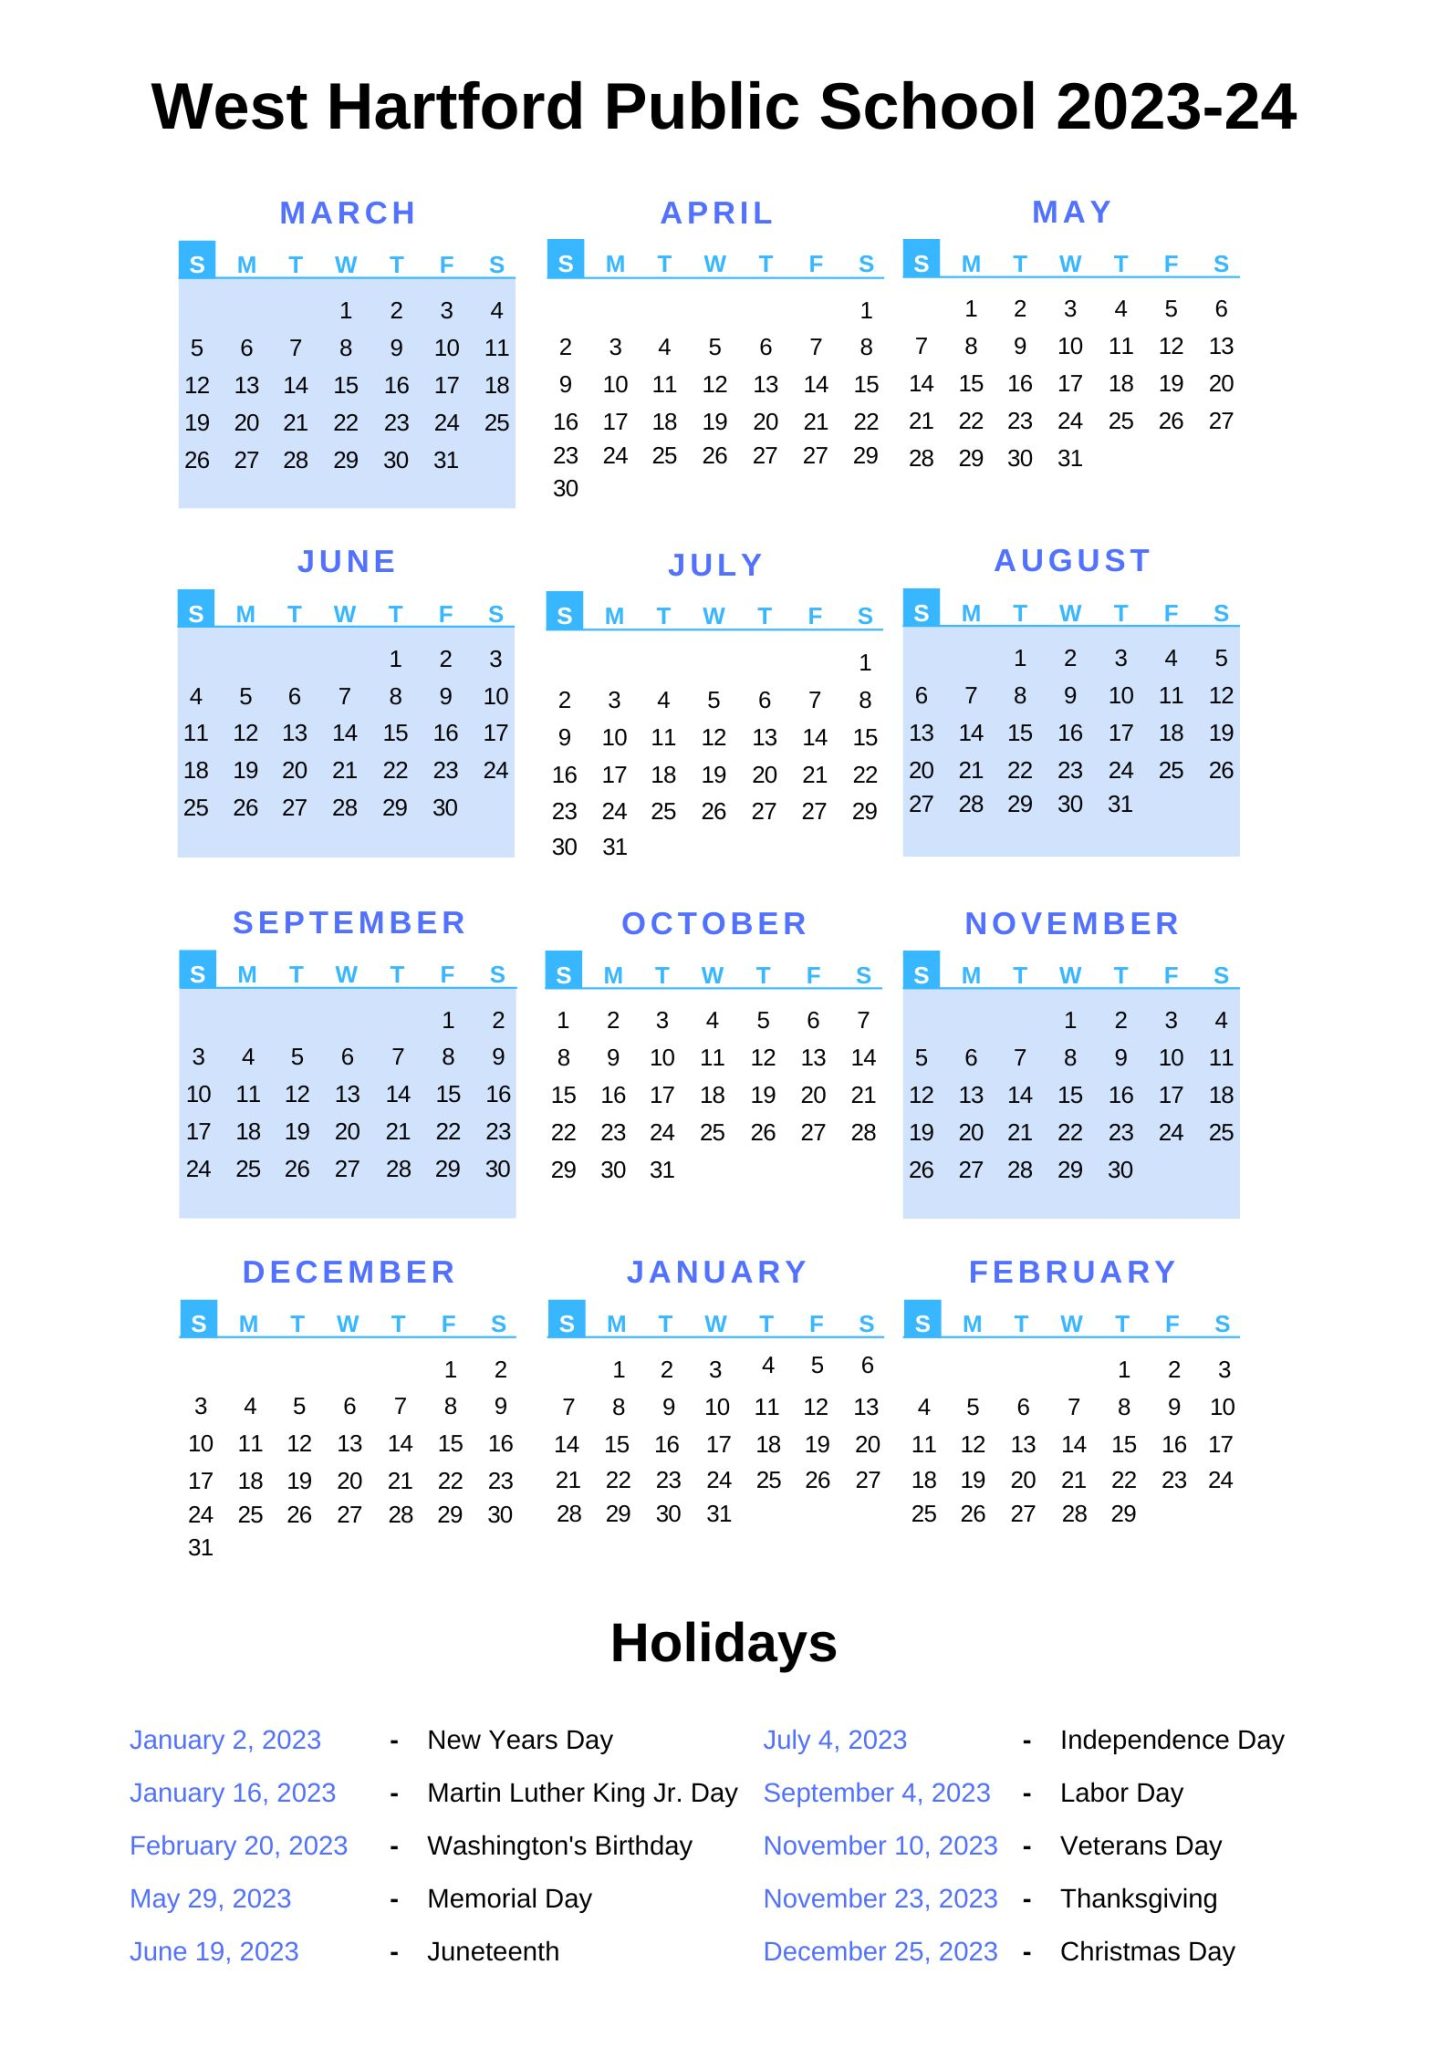 west-hartford-public-schools-calendar-2023-24-with-holidays